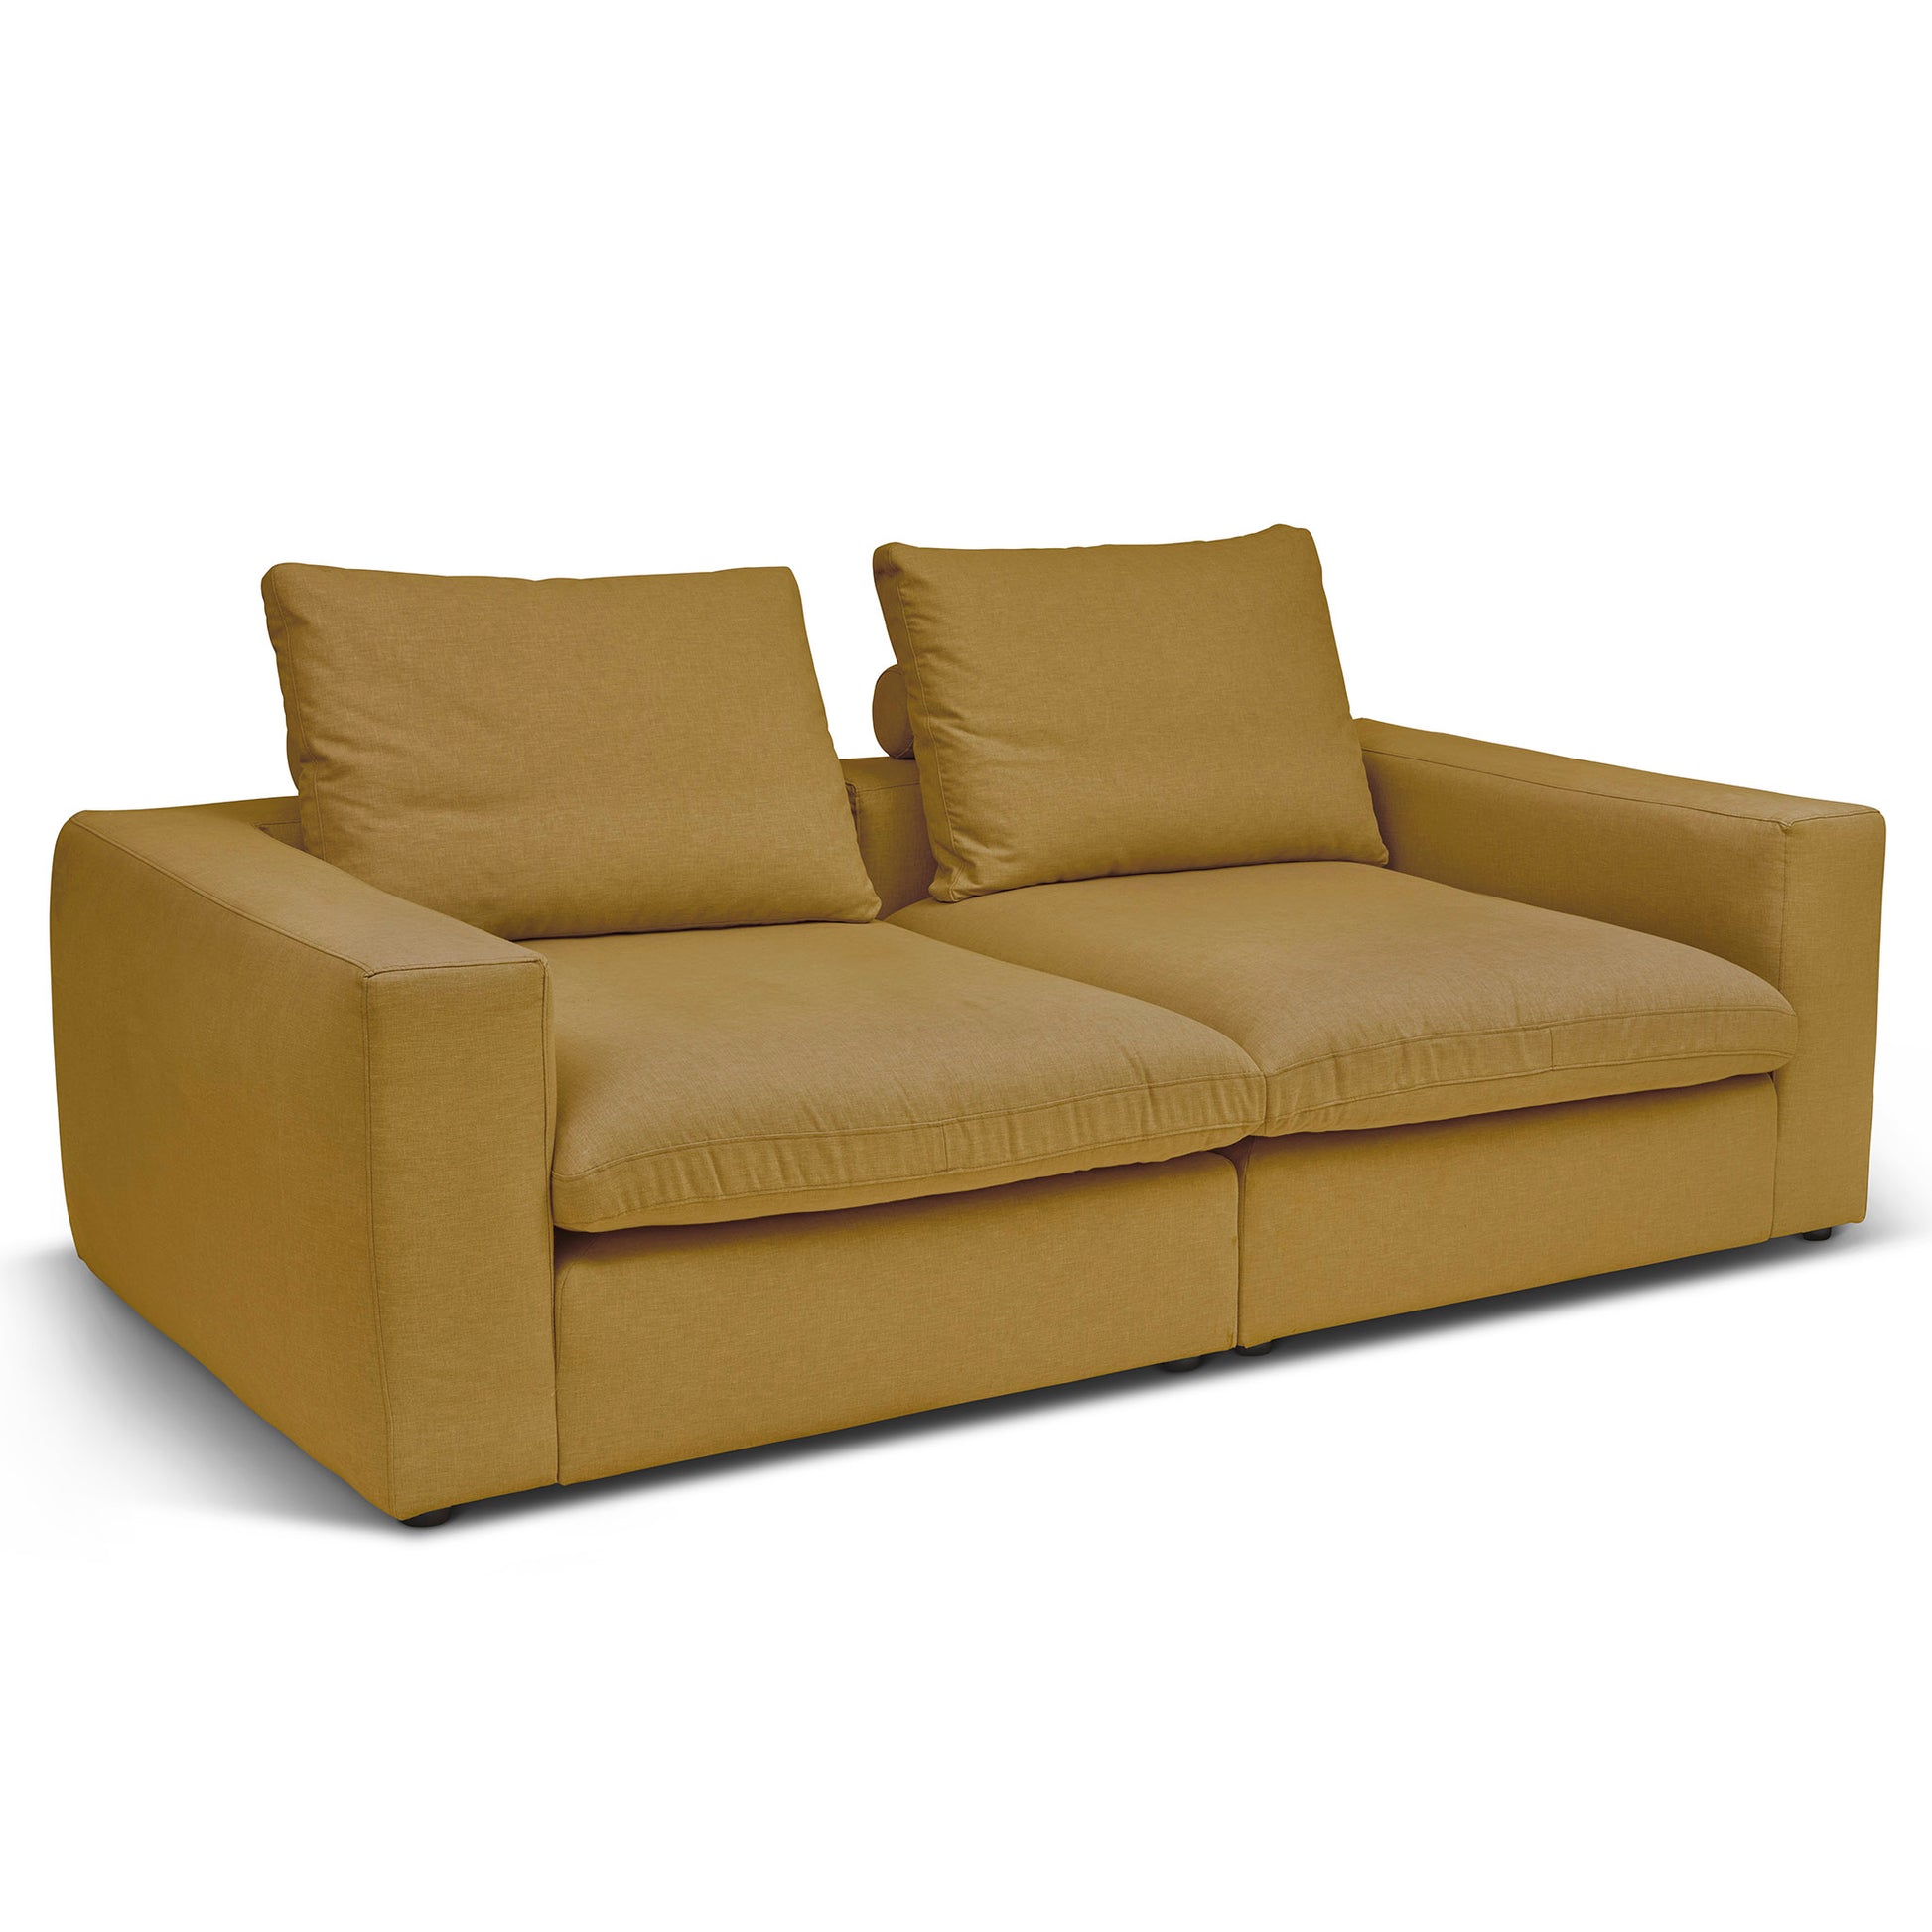 Extra djup 3-sits soffa i gul färg. Palazzo är en byggbar modulsoffa